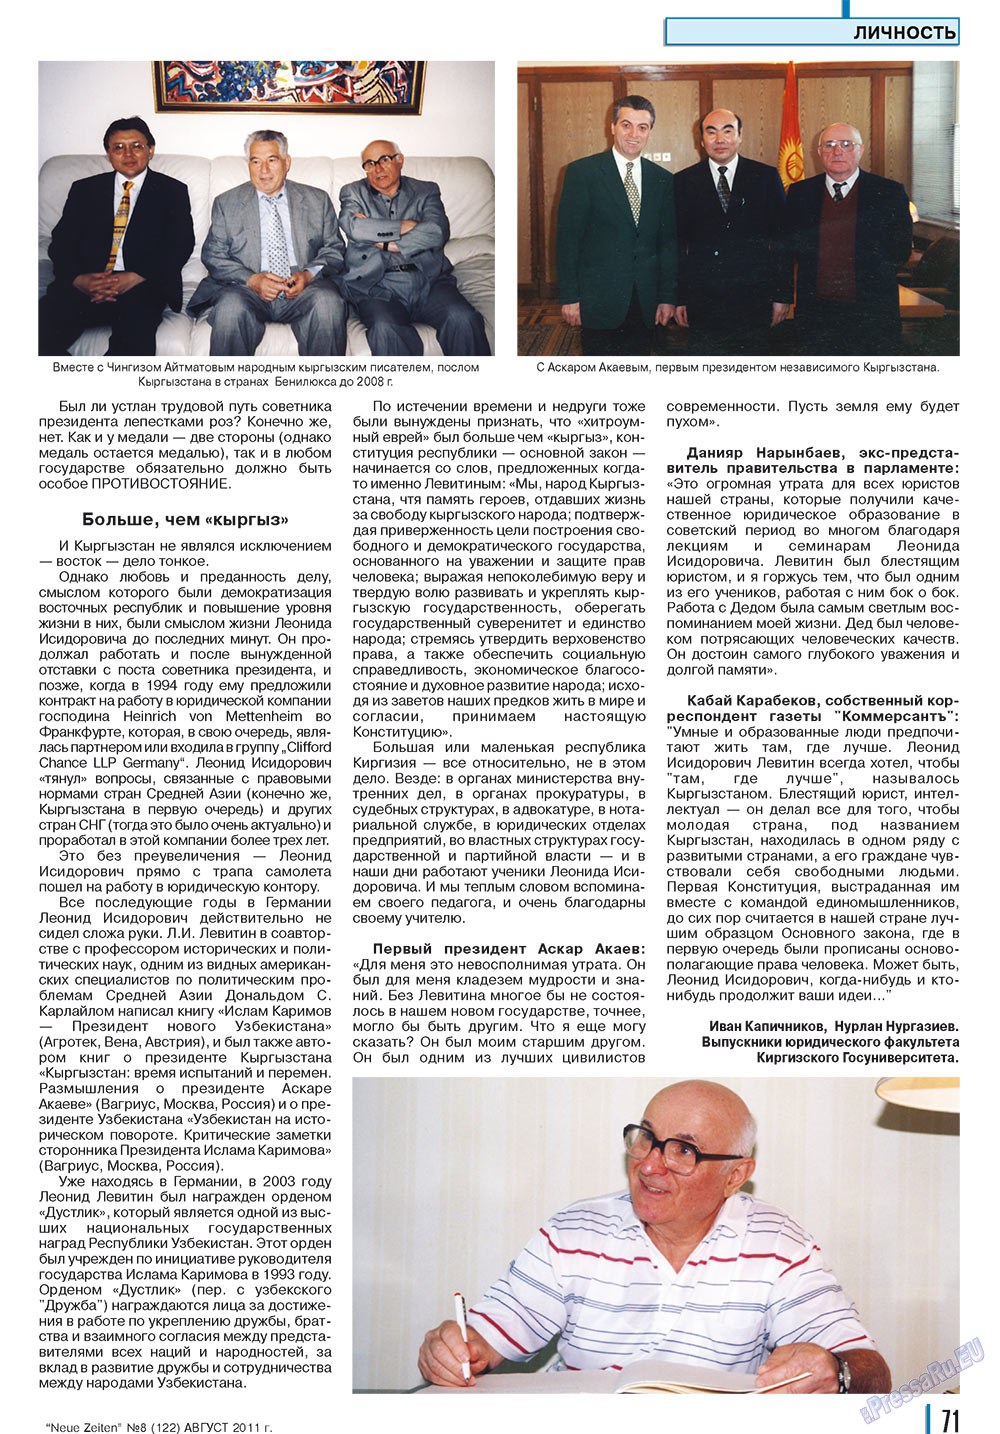 Neue Zeiten (журнал). 2011 год, номер 8, стр. 71